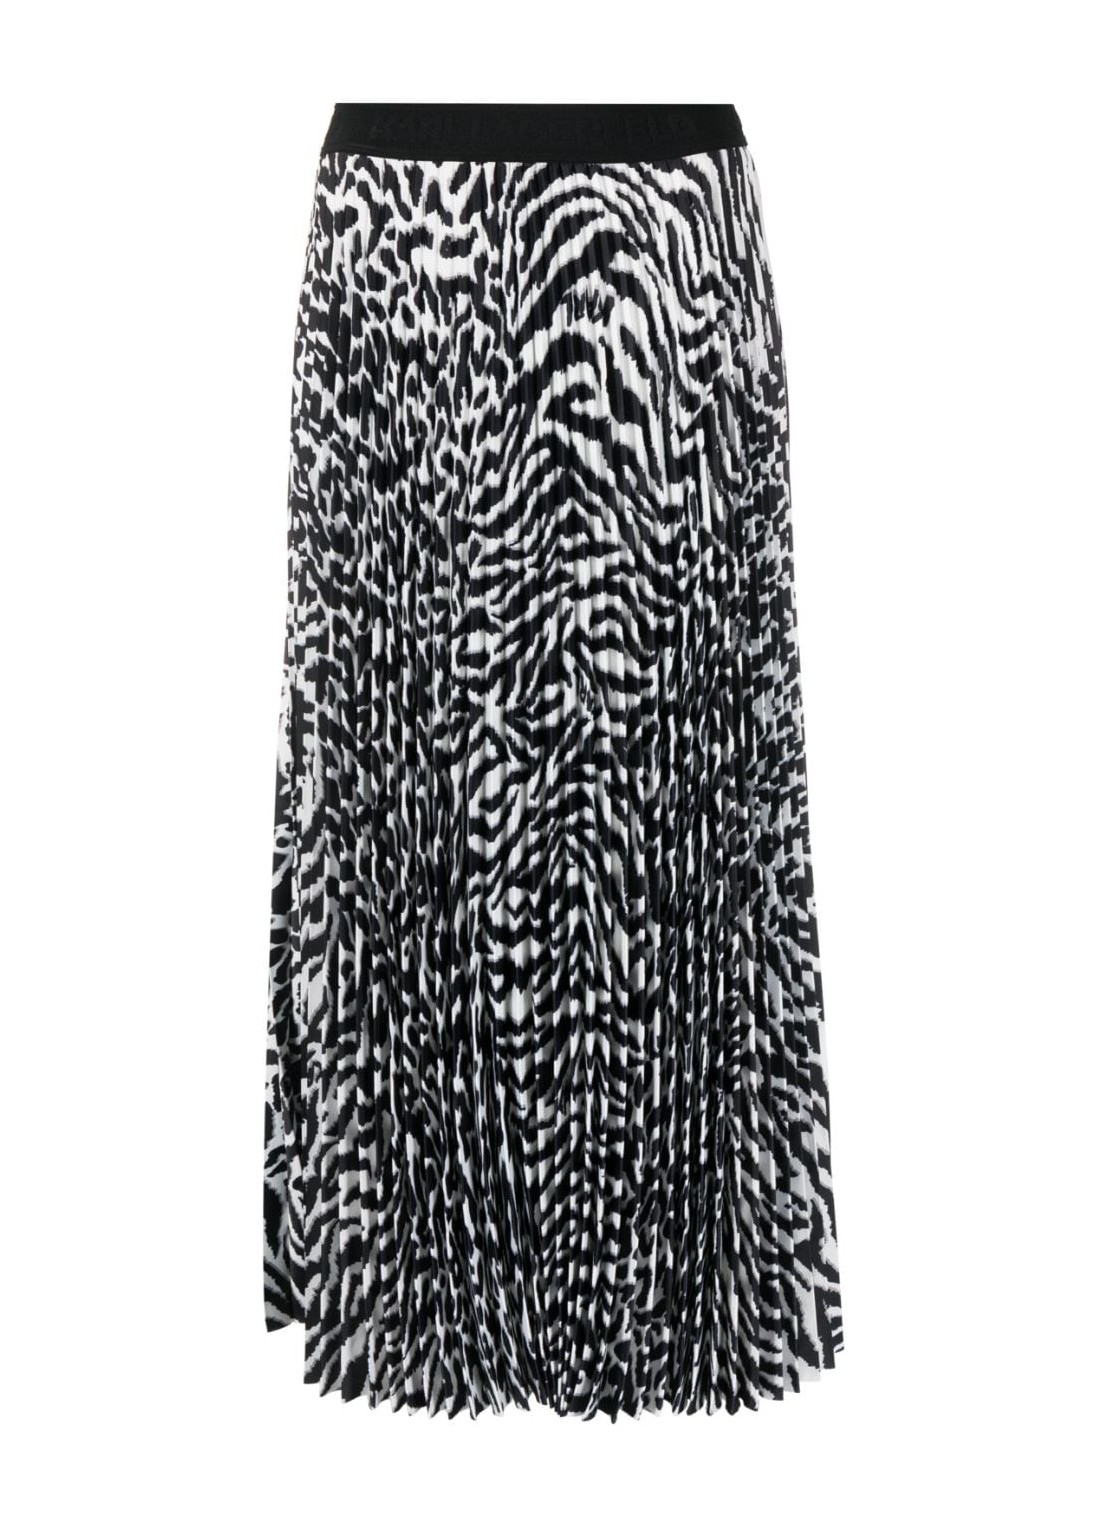 Falda karl lagerfeld skirt woman animal print pleated skirt 240w1209 r04 talla multi
 